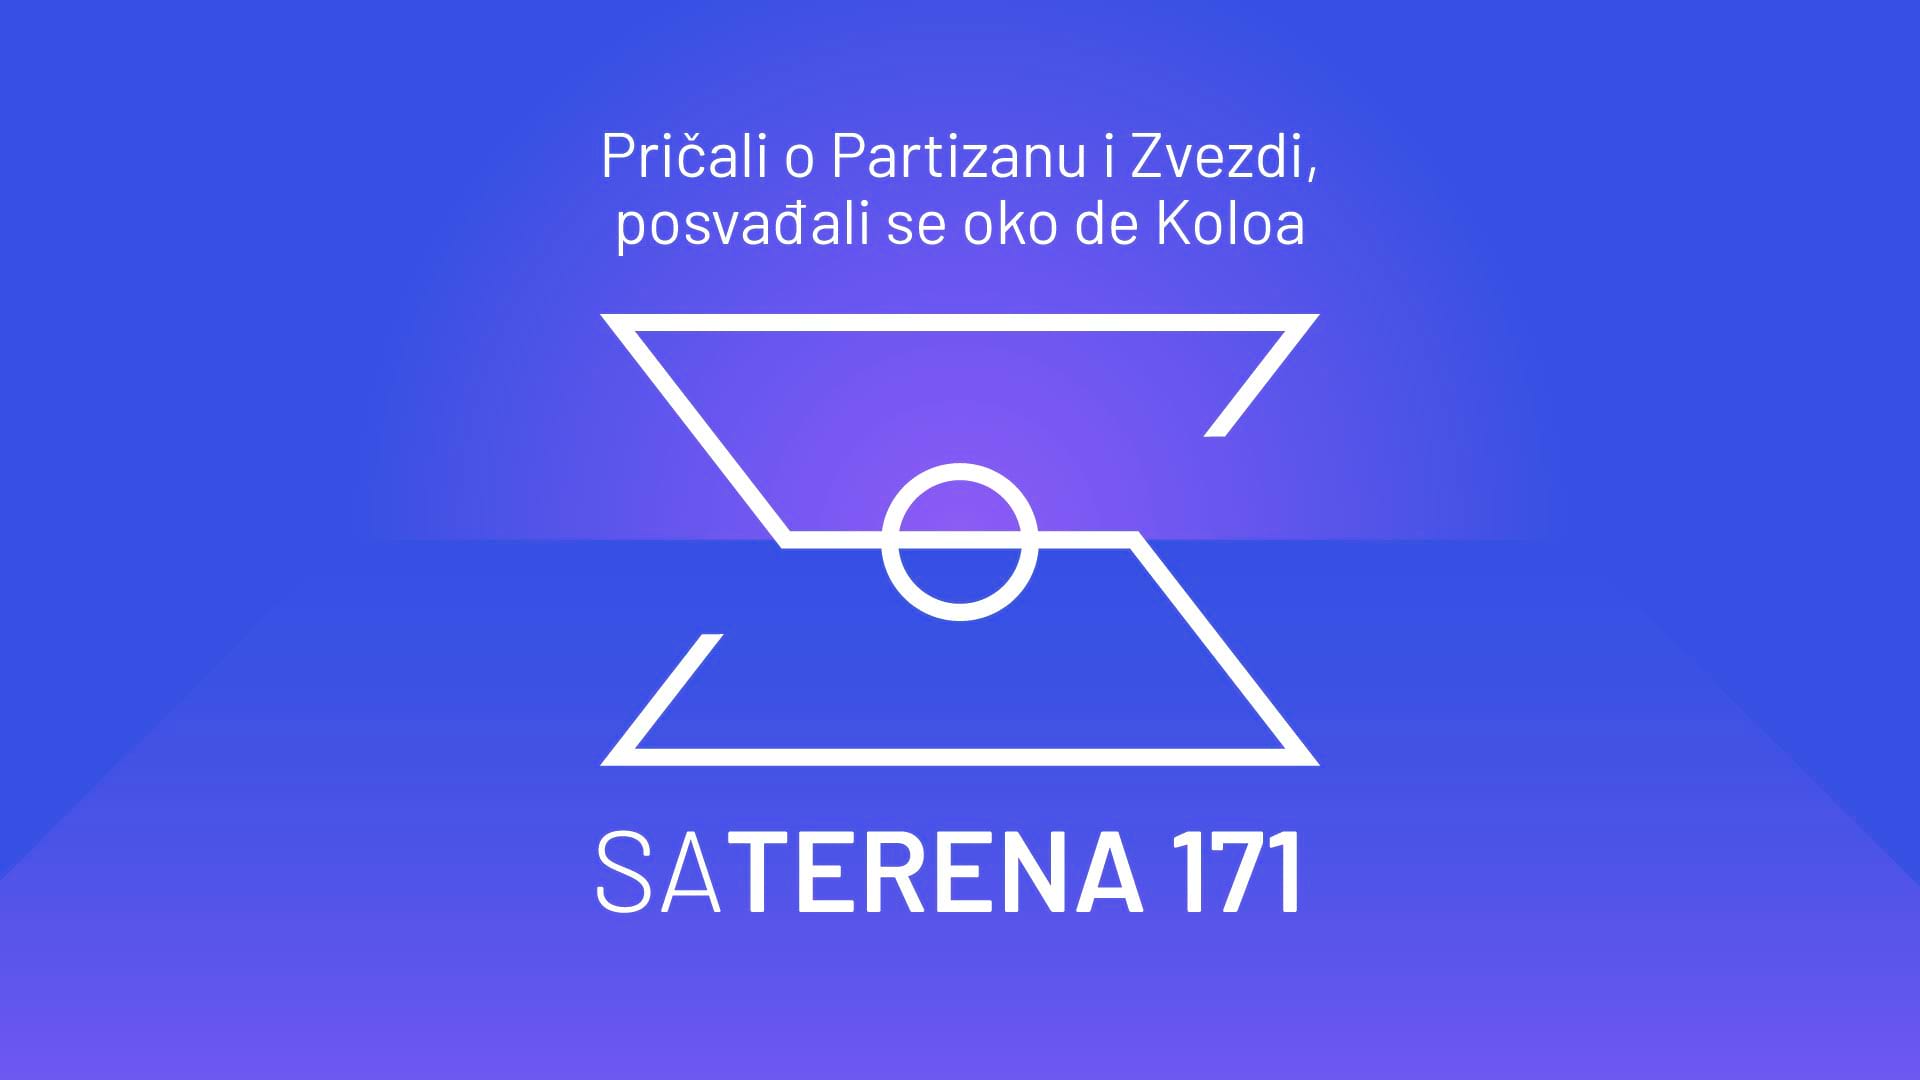 Sa terena 171: Pričali o Partizanu i Zvezdi, posvađali se oko De Koloa